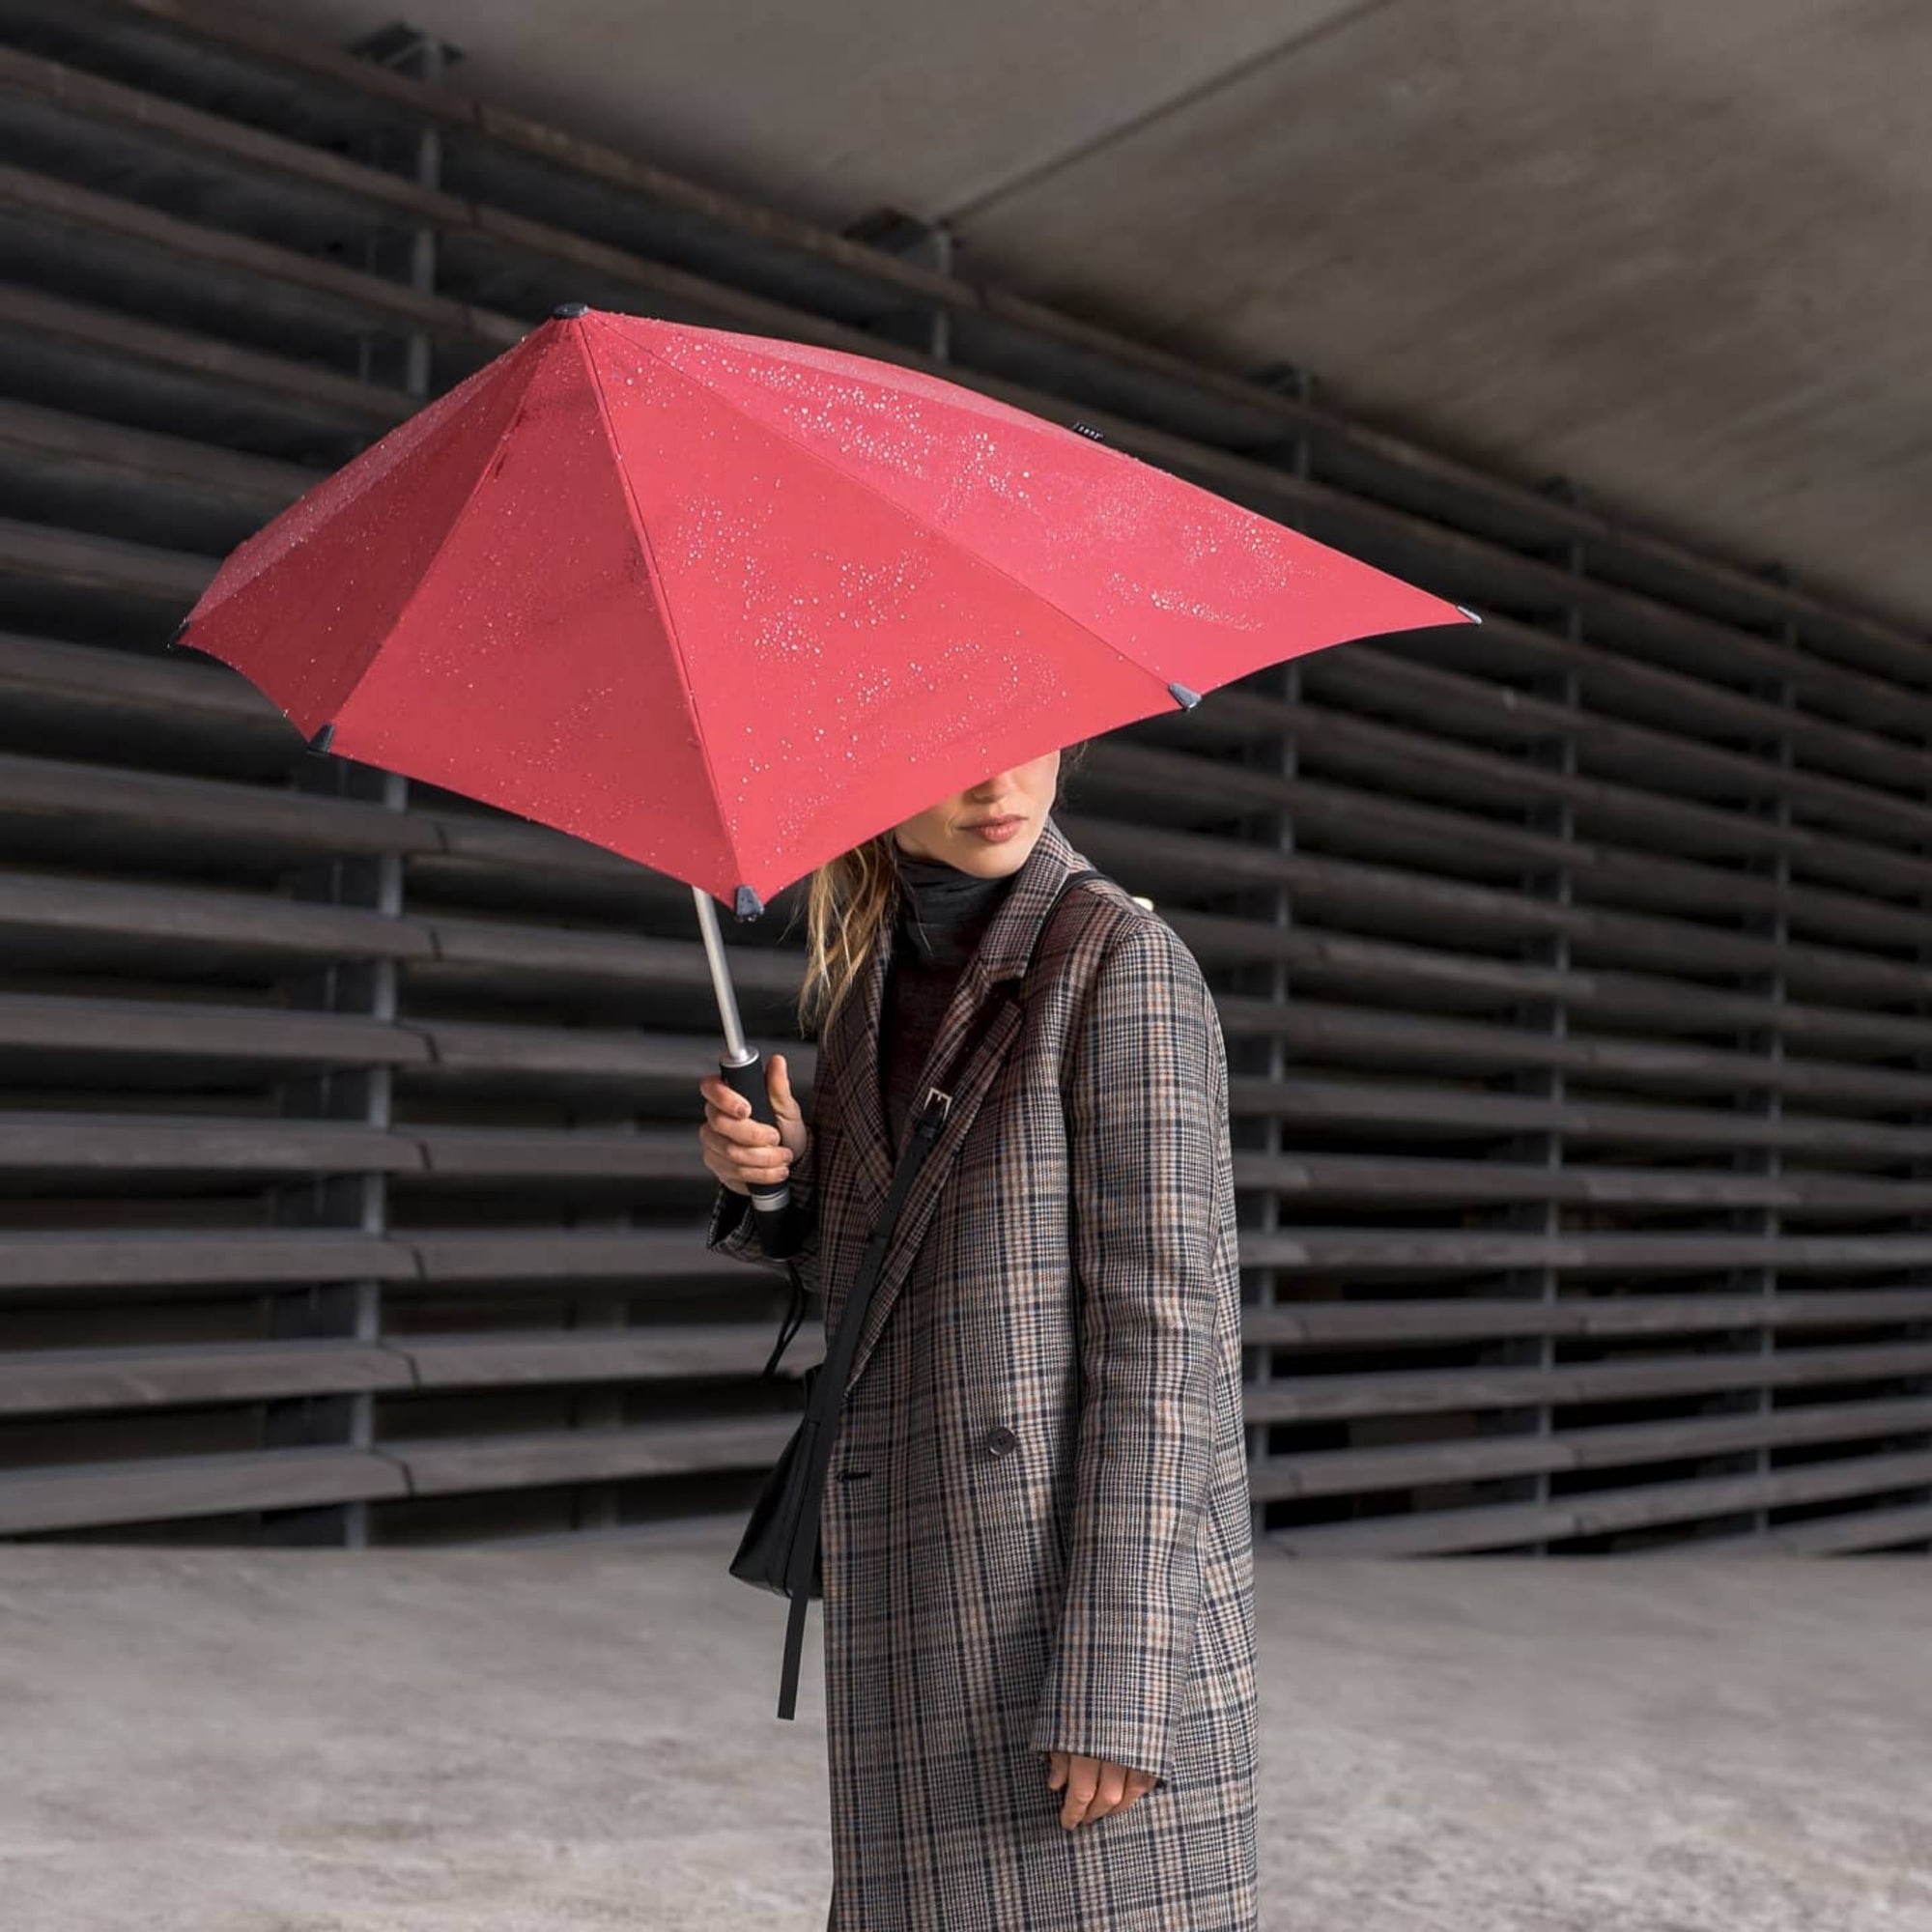 Senz° storm umbrella, passion | HOMELESS.hk